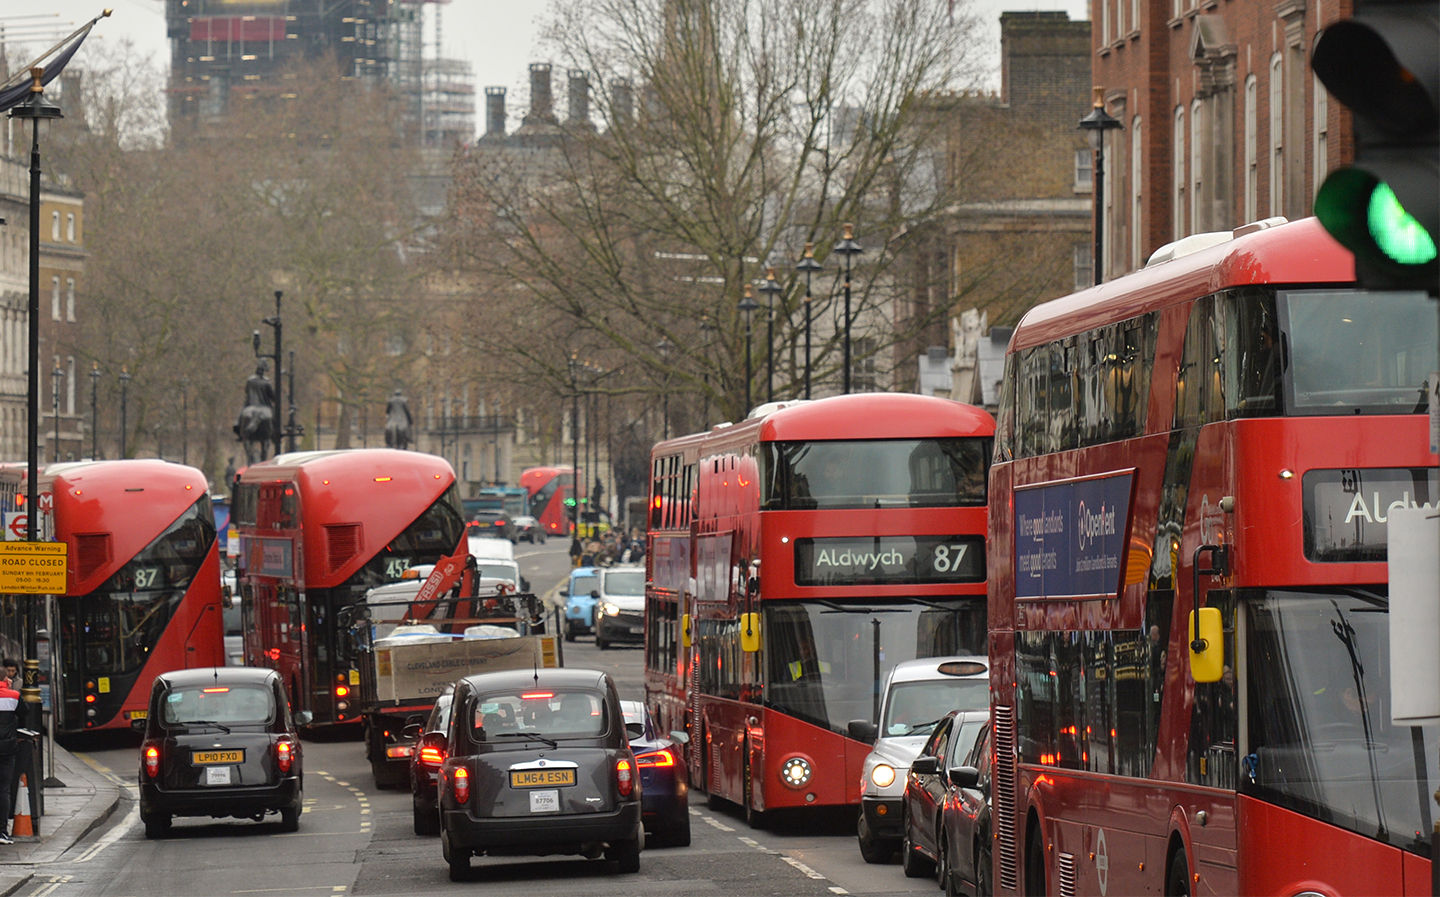 London Traffic